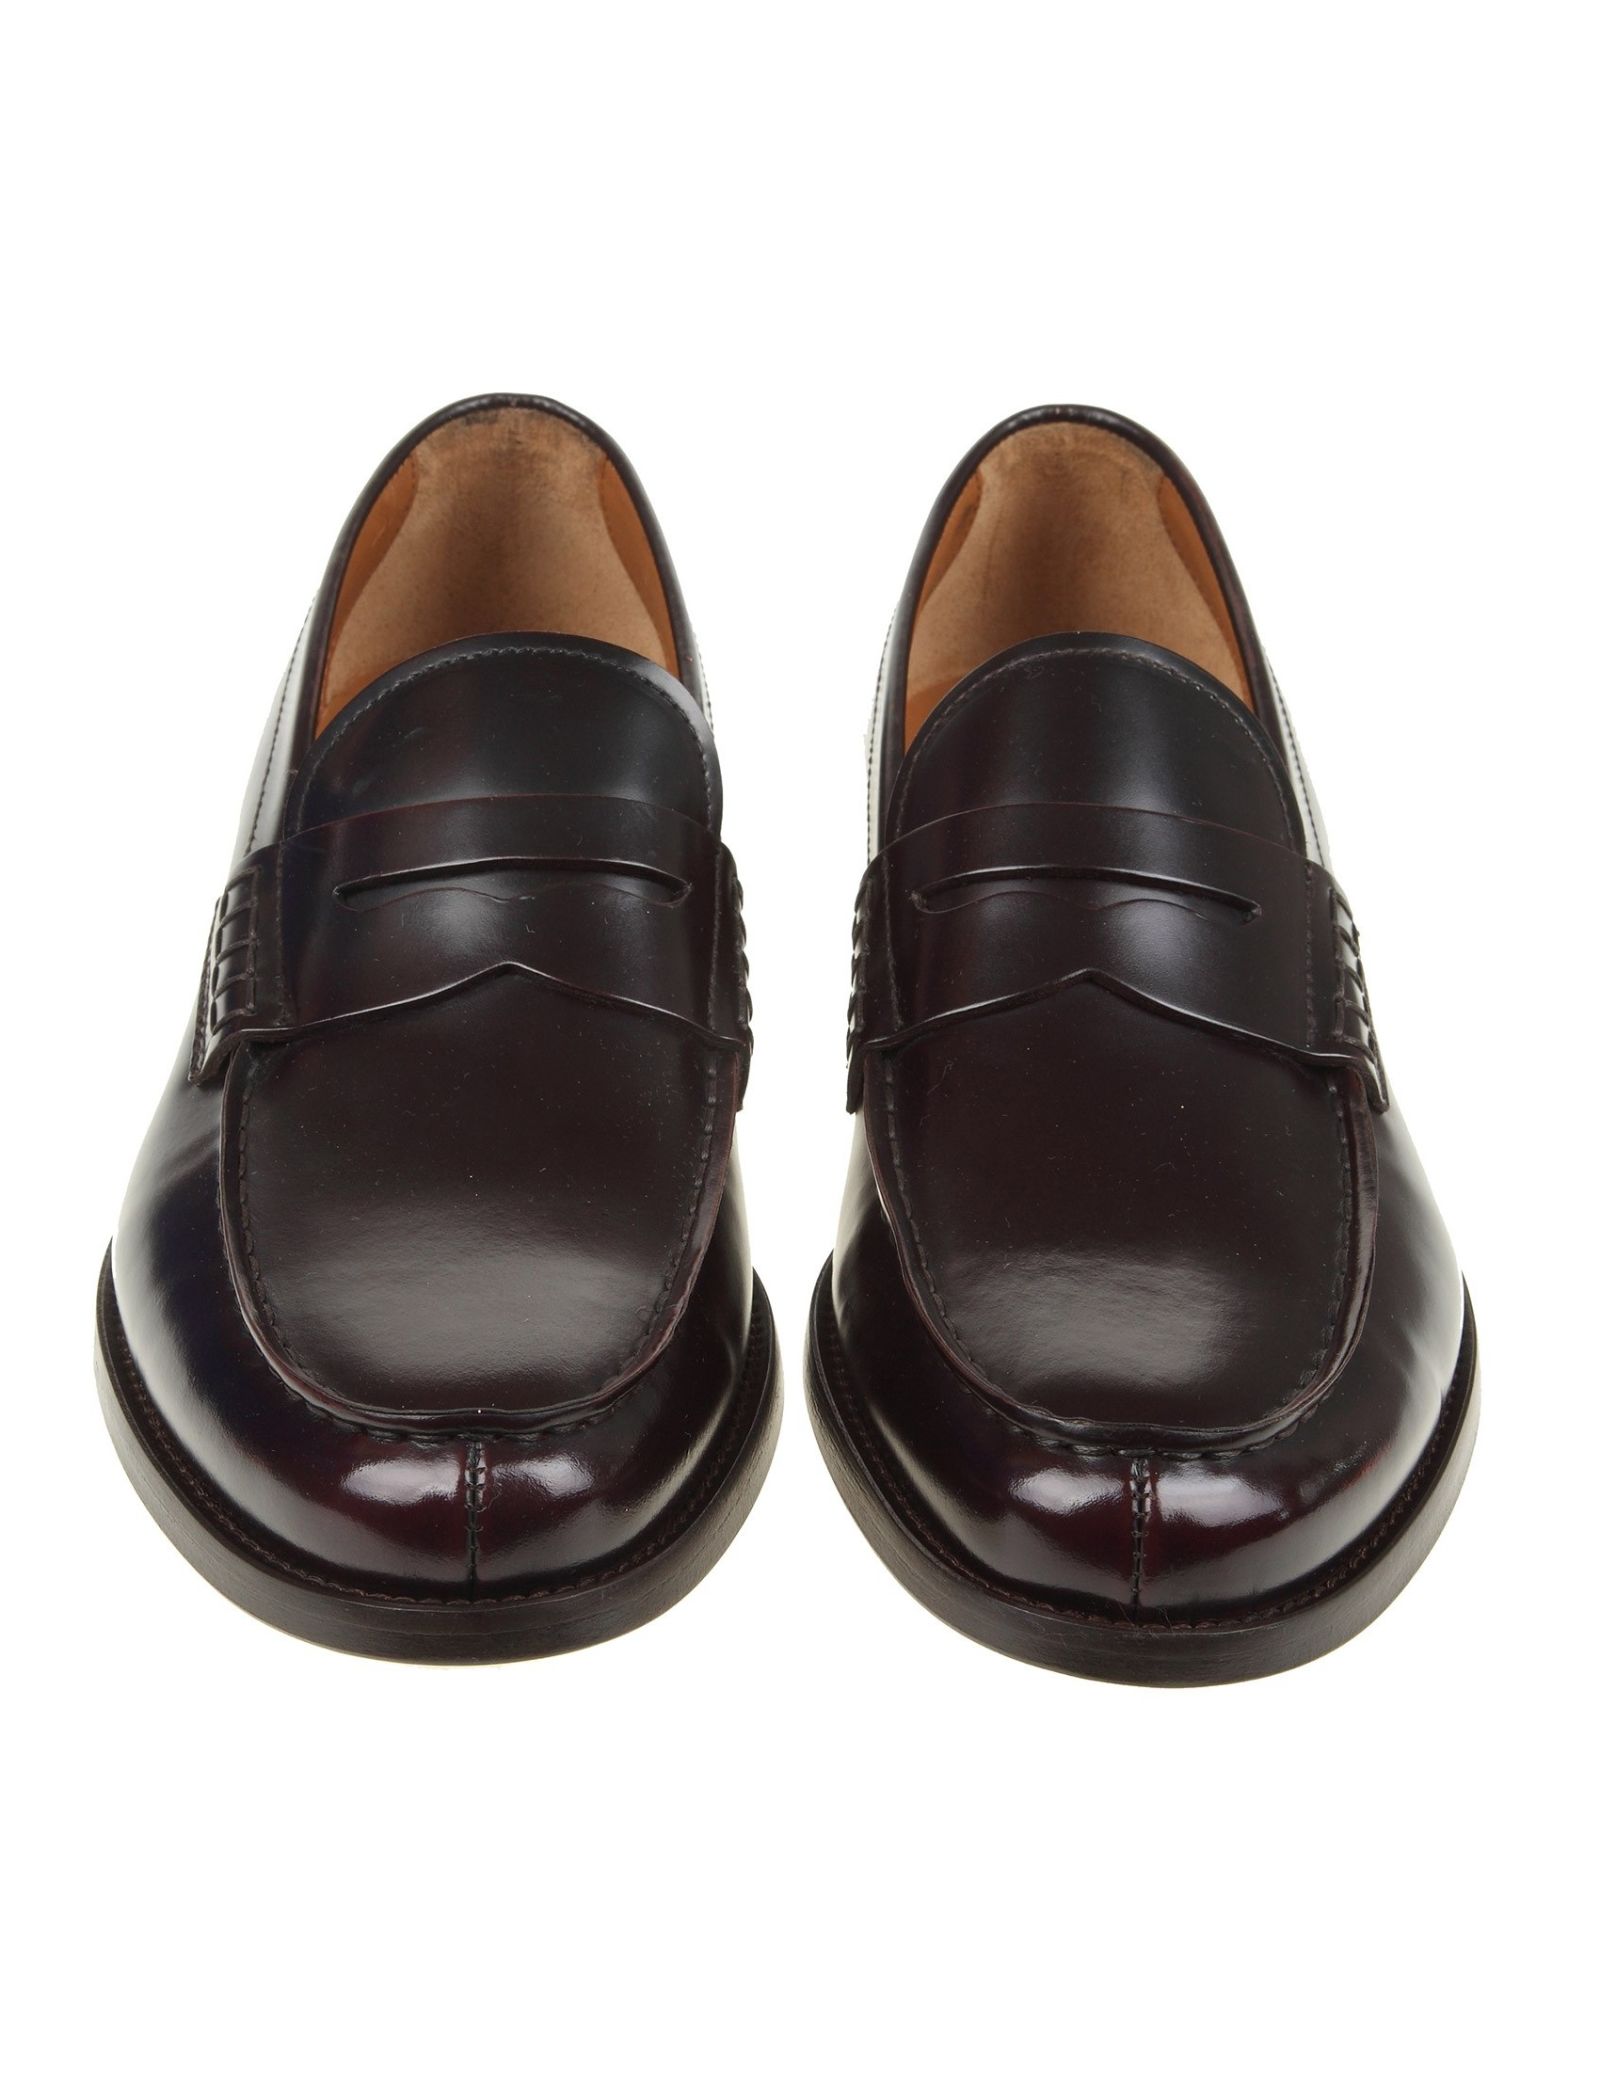 Doucal's Doucal's Shoes In Skin Color Burgundy - Burgundy - 10755070 ...